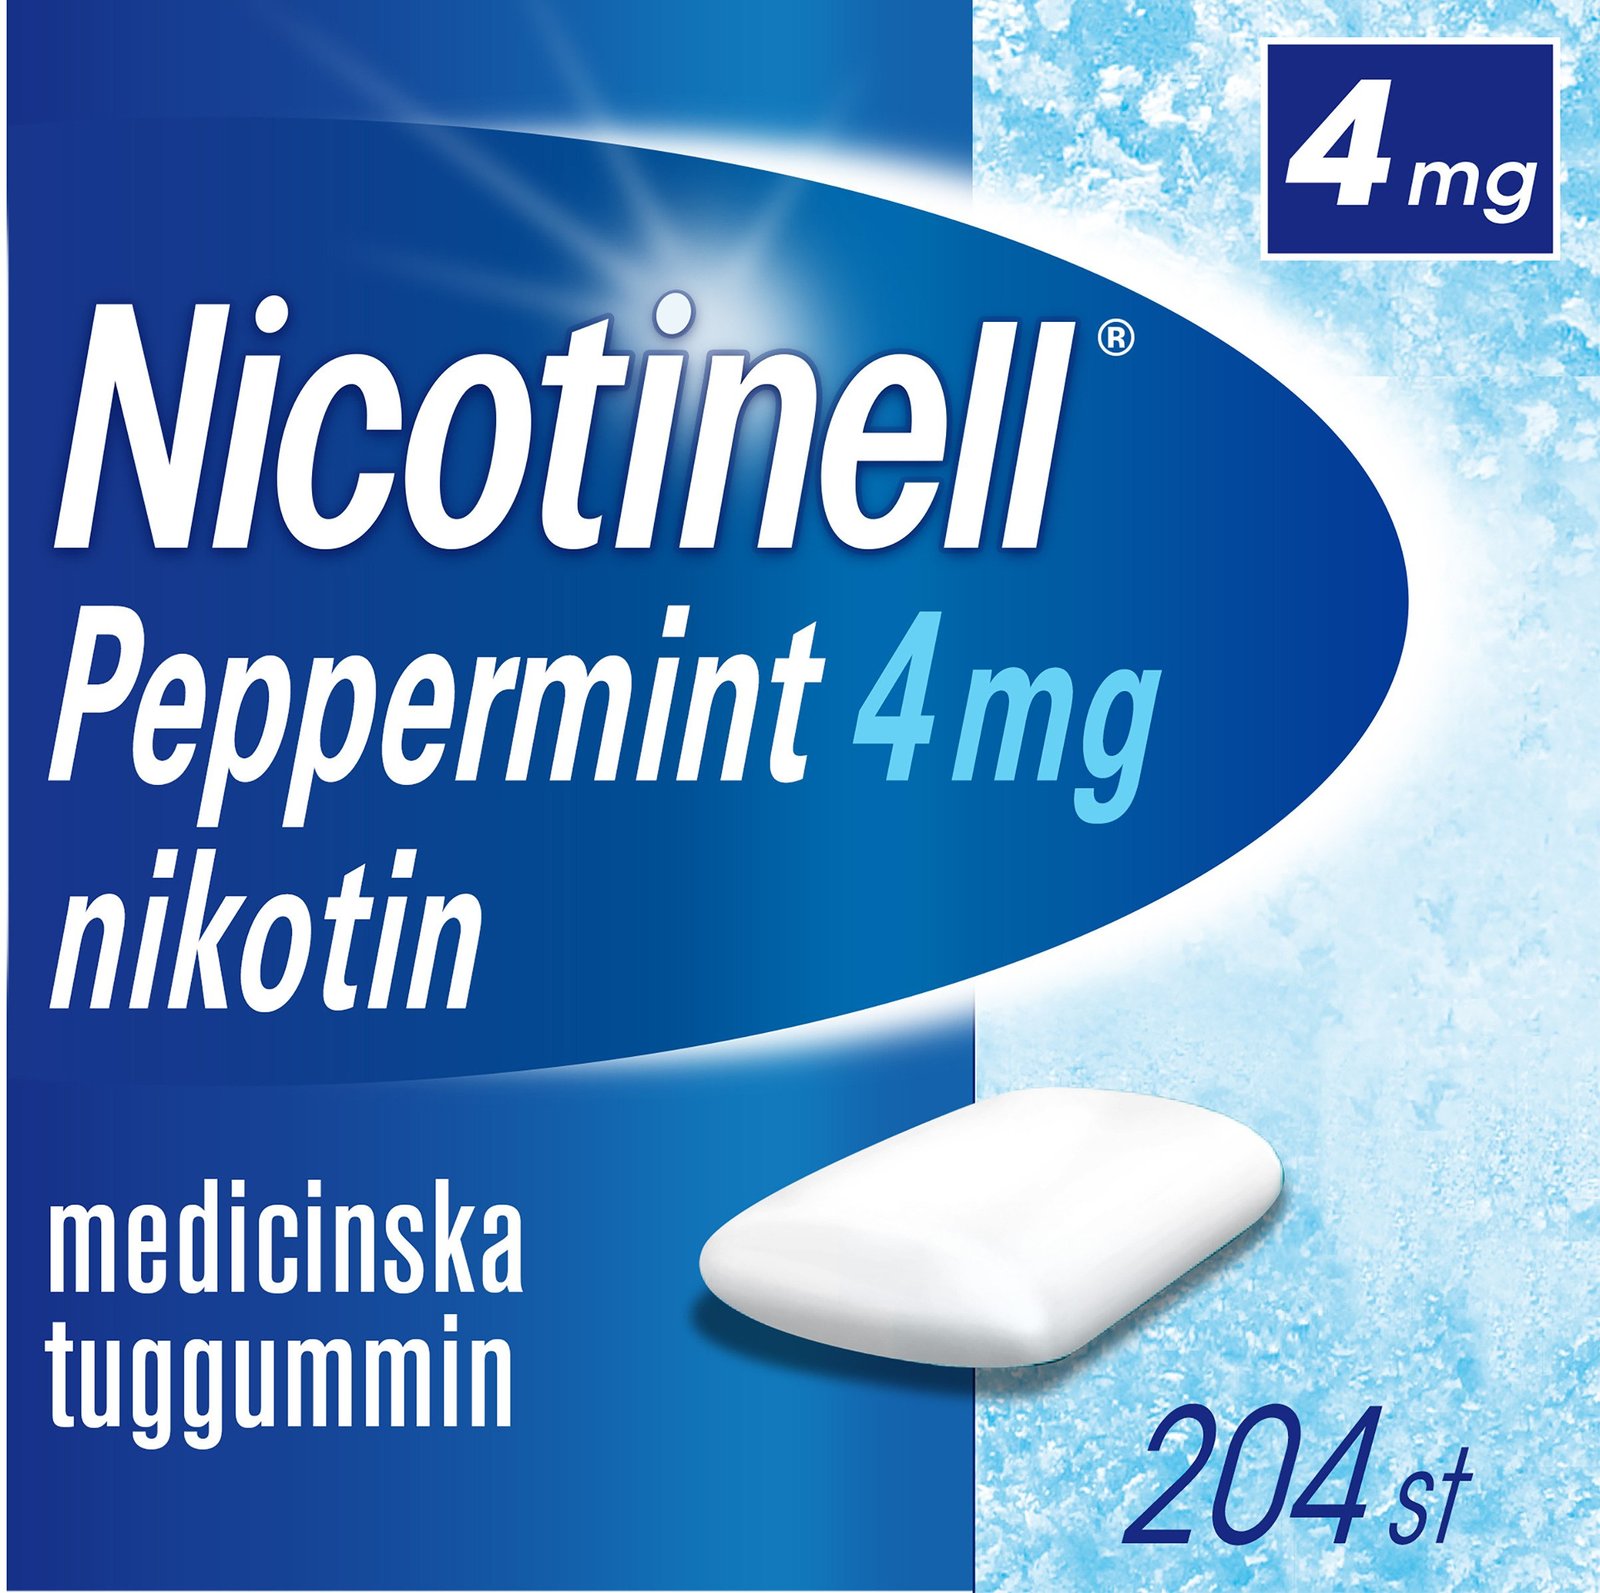 Nicotinell Peppermint 4mg Nikotin Medicinska tuggummin 204 st